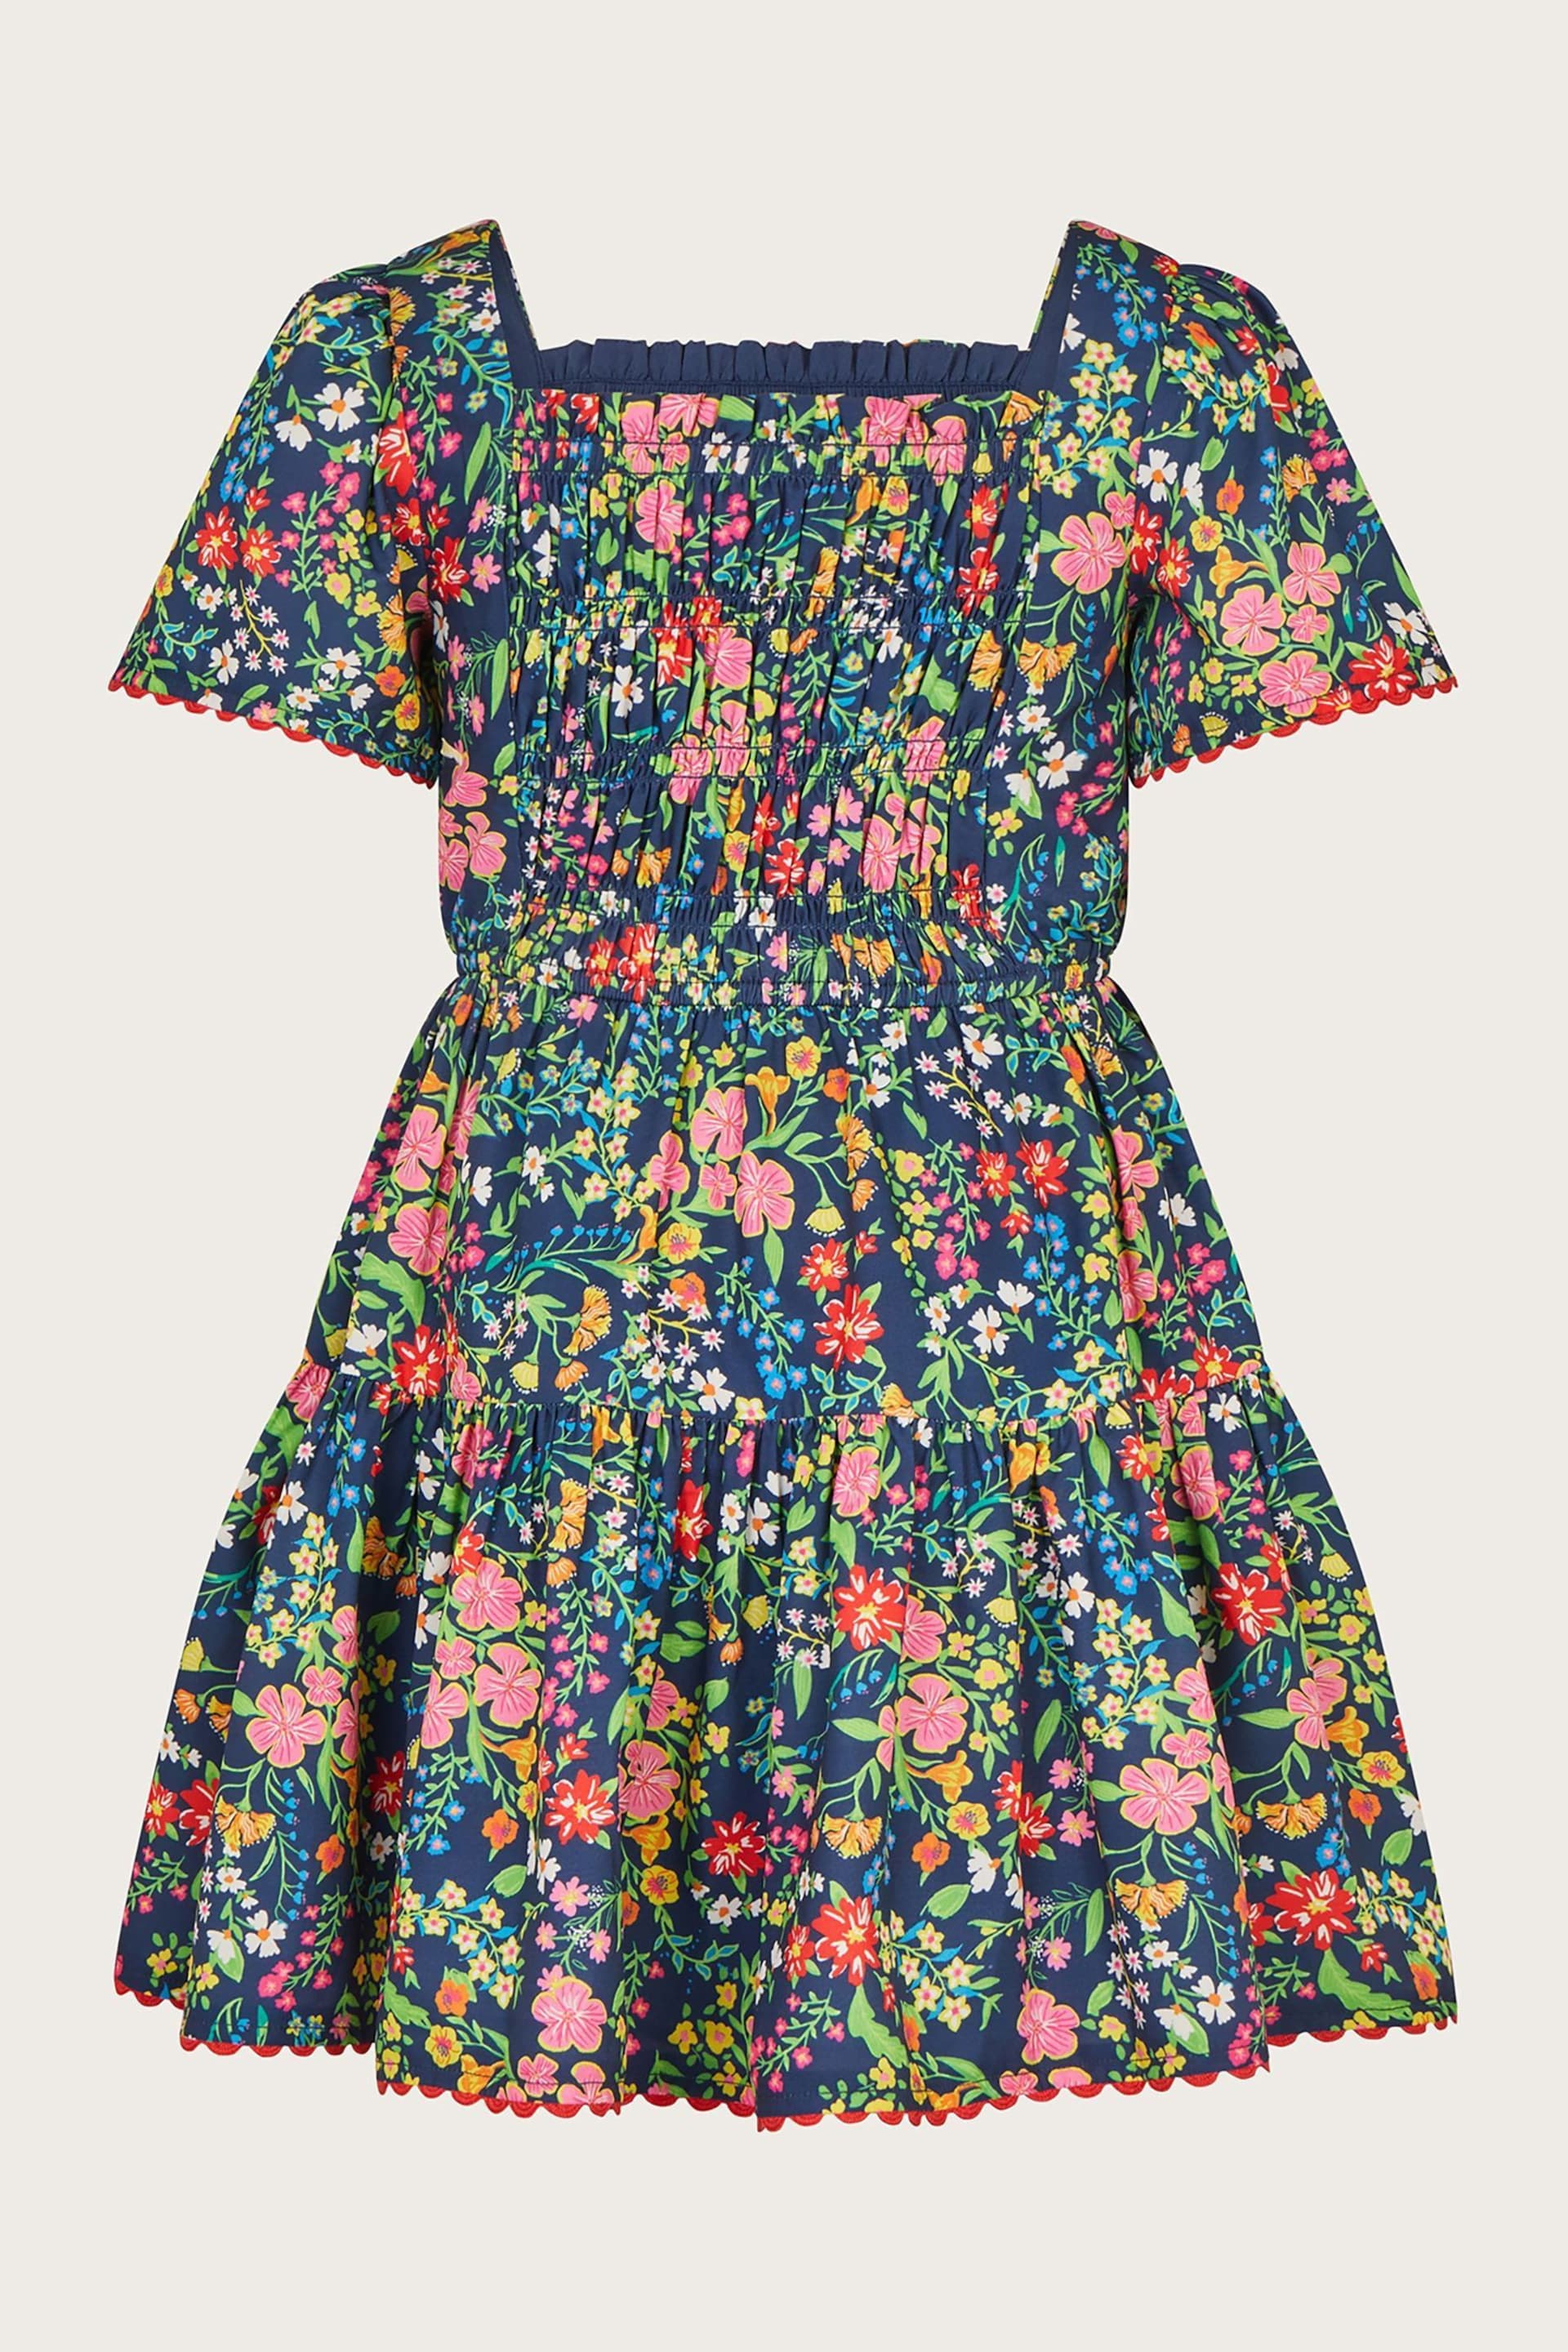 Monsoon Blue Paisley Print Dress - Image 2 of 4